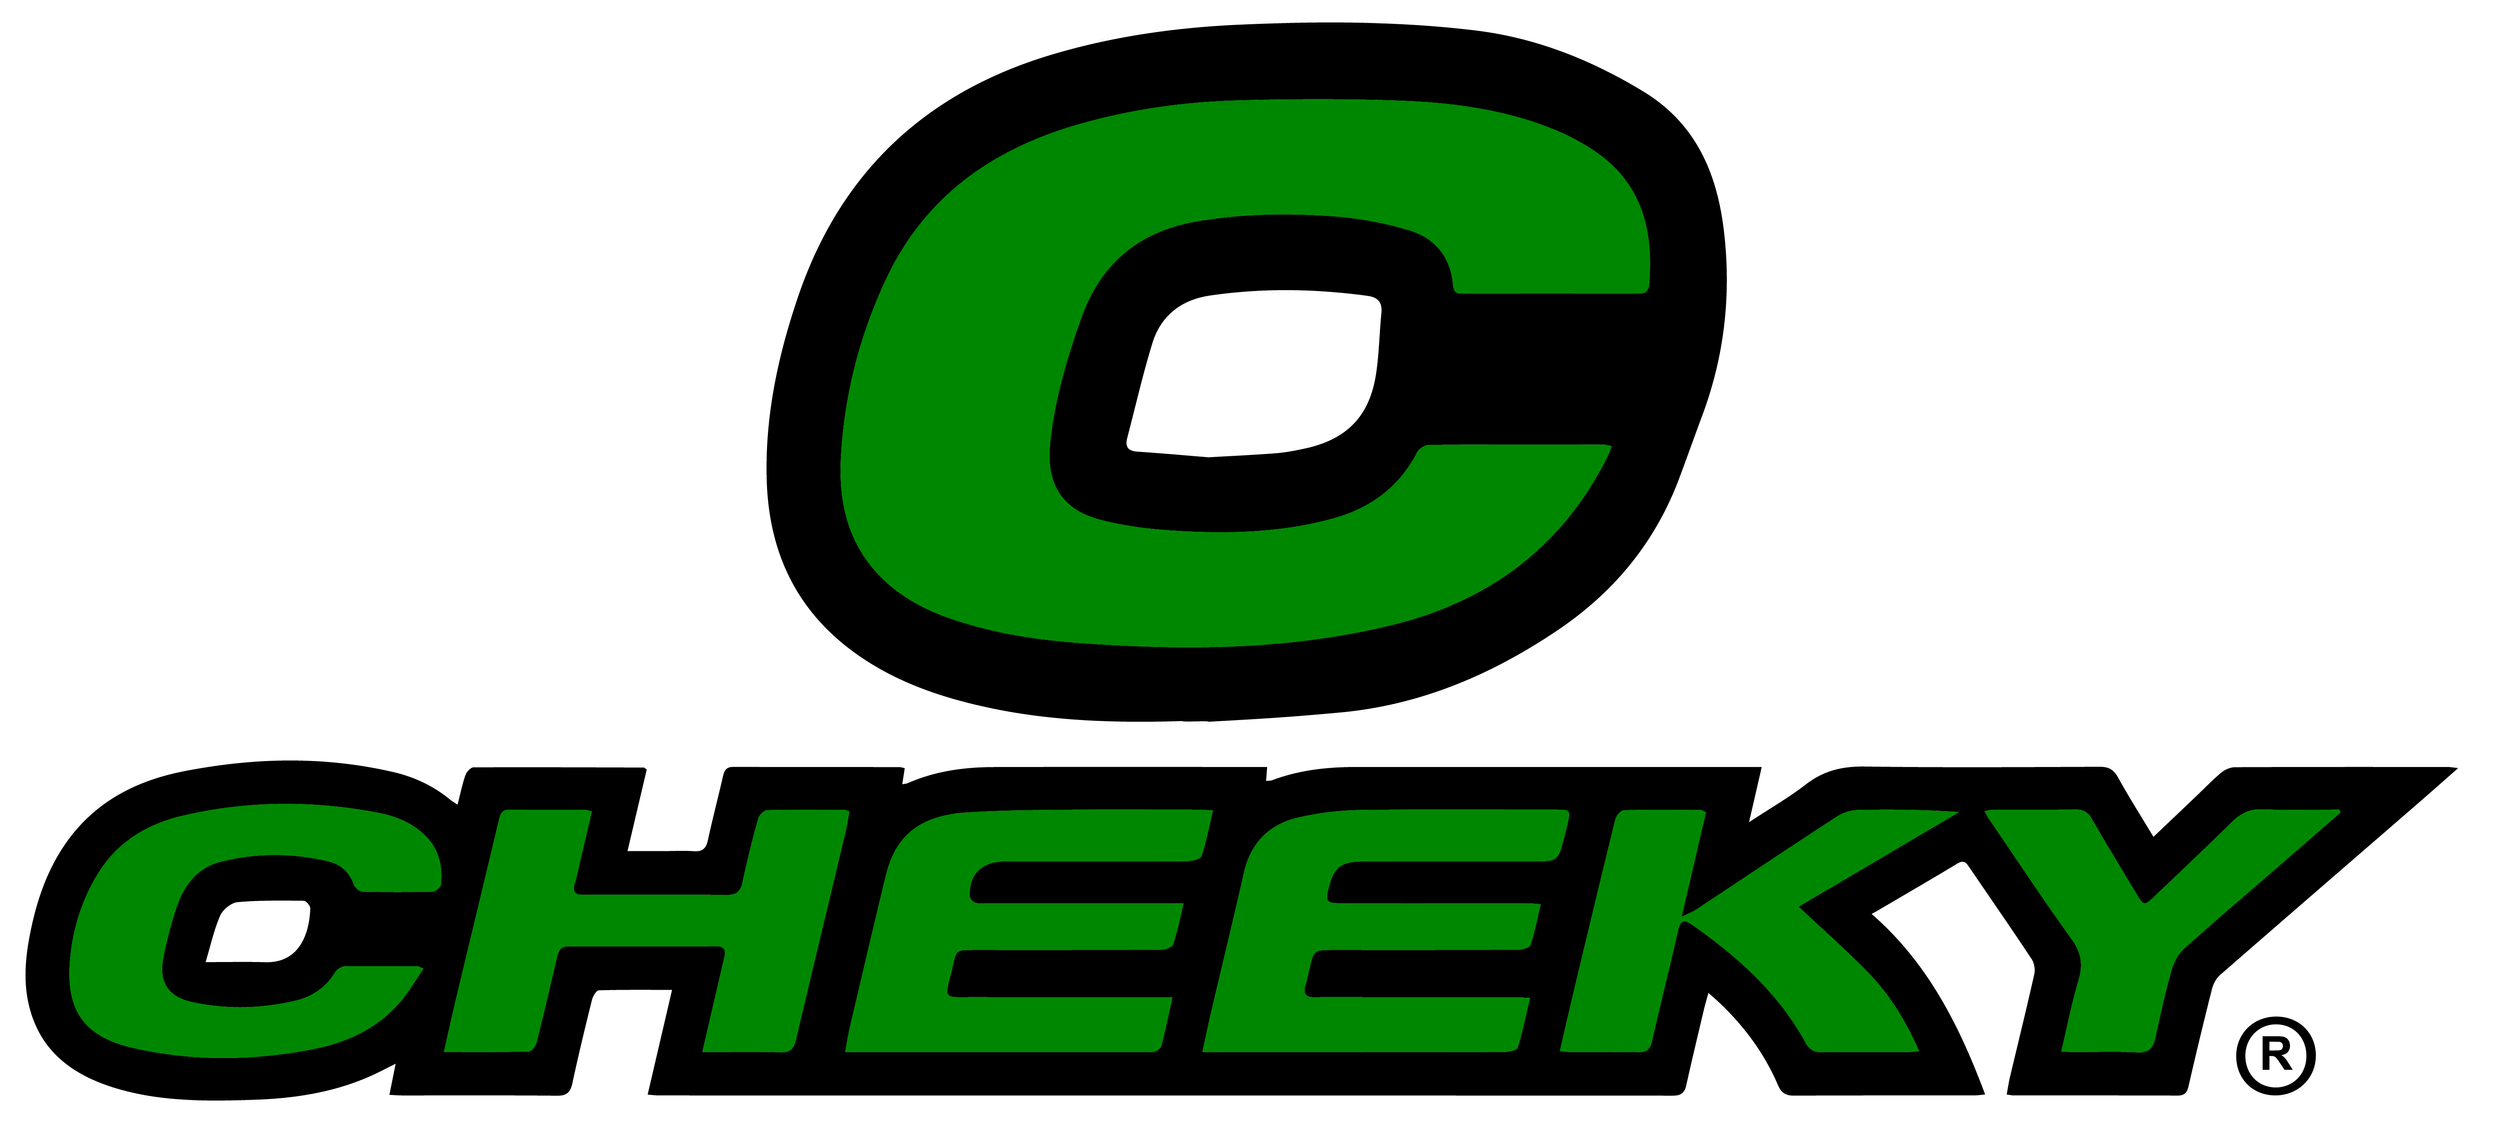 Cheeky Logo w C.png